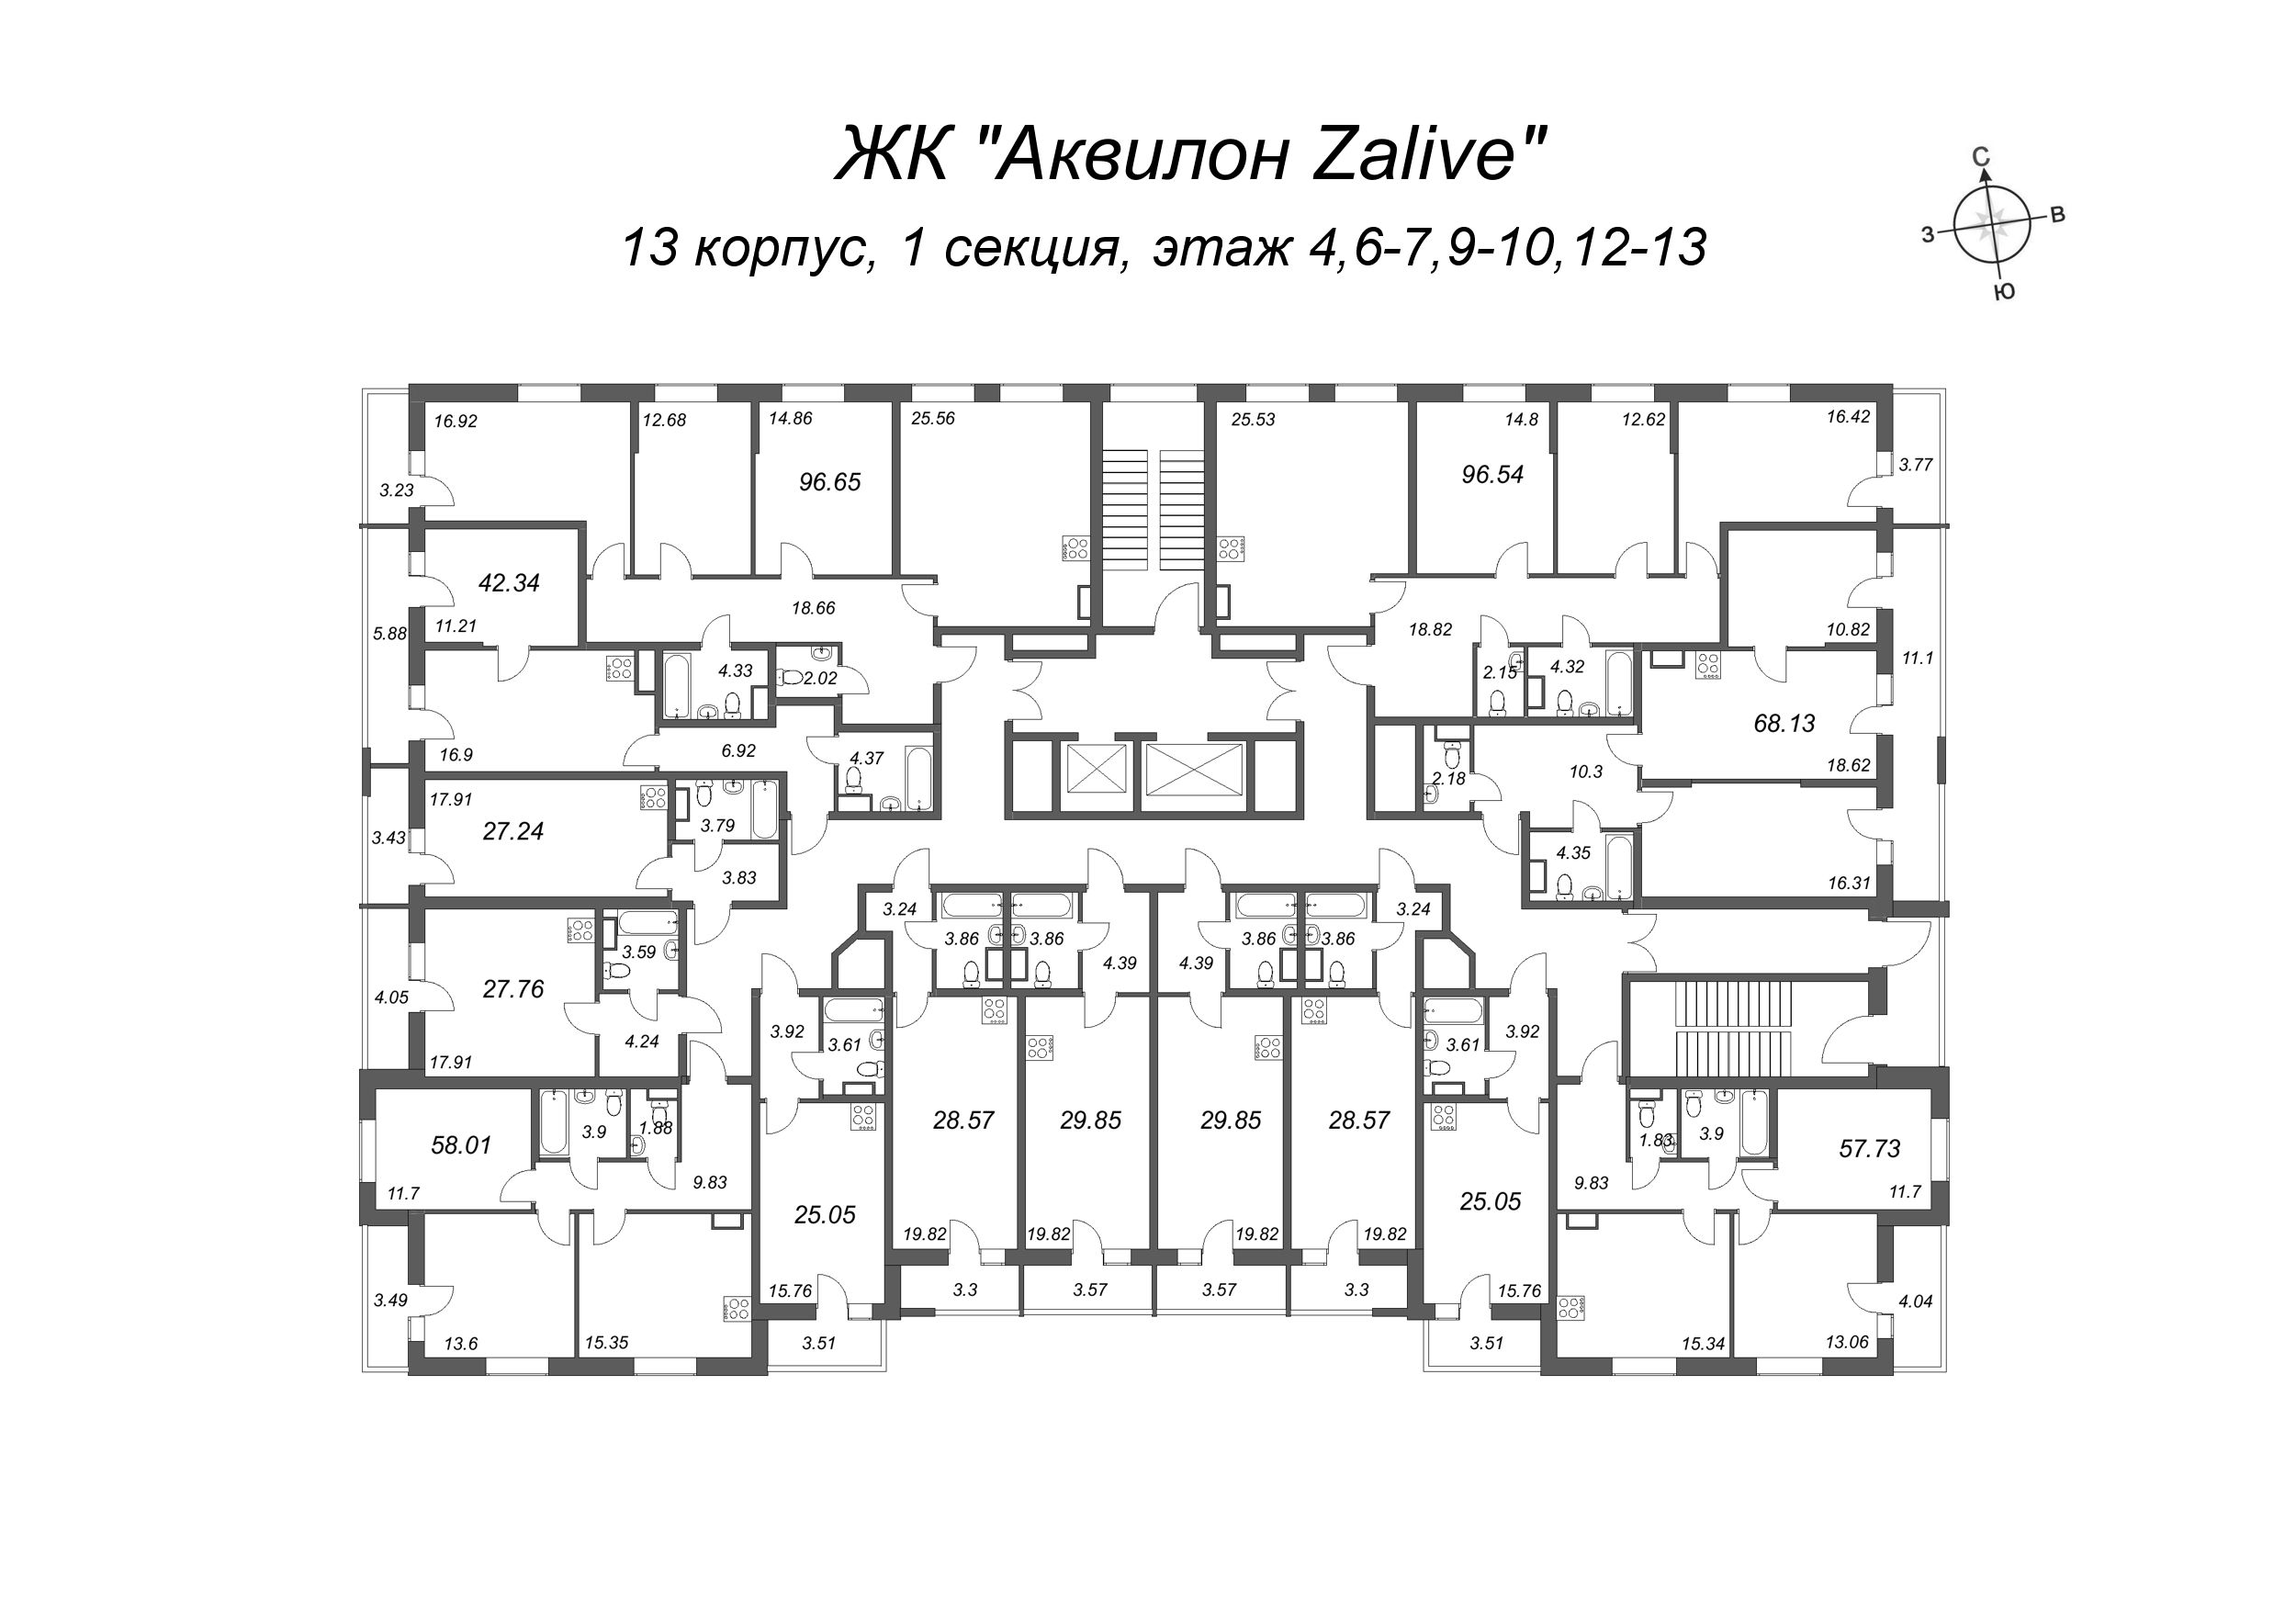 4-комнатная (Евро) квартира, 96.54 м² - планировка этажа